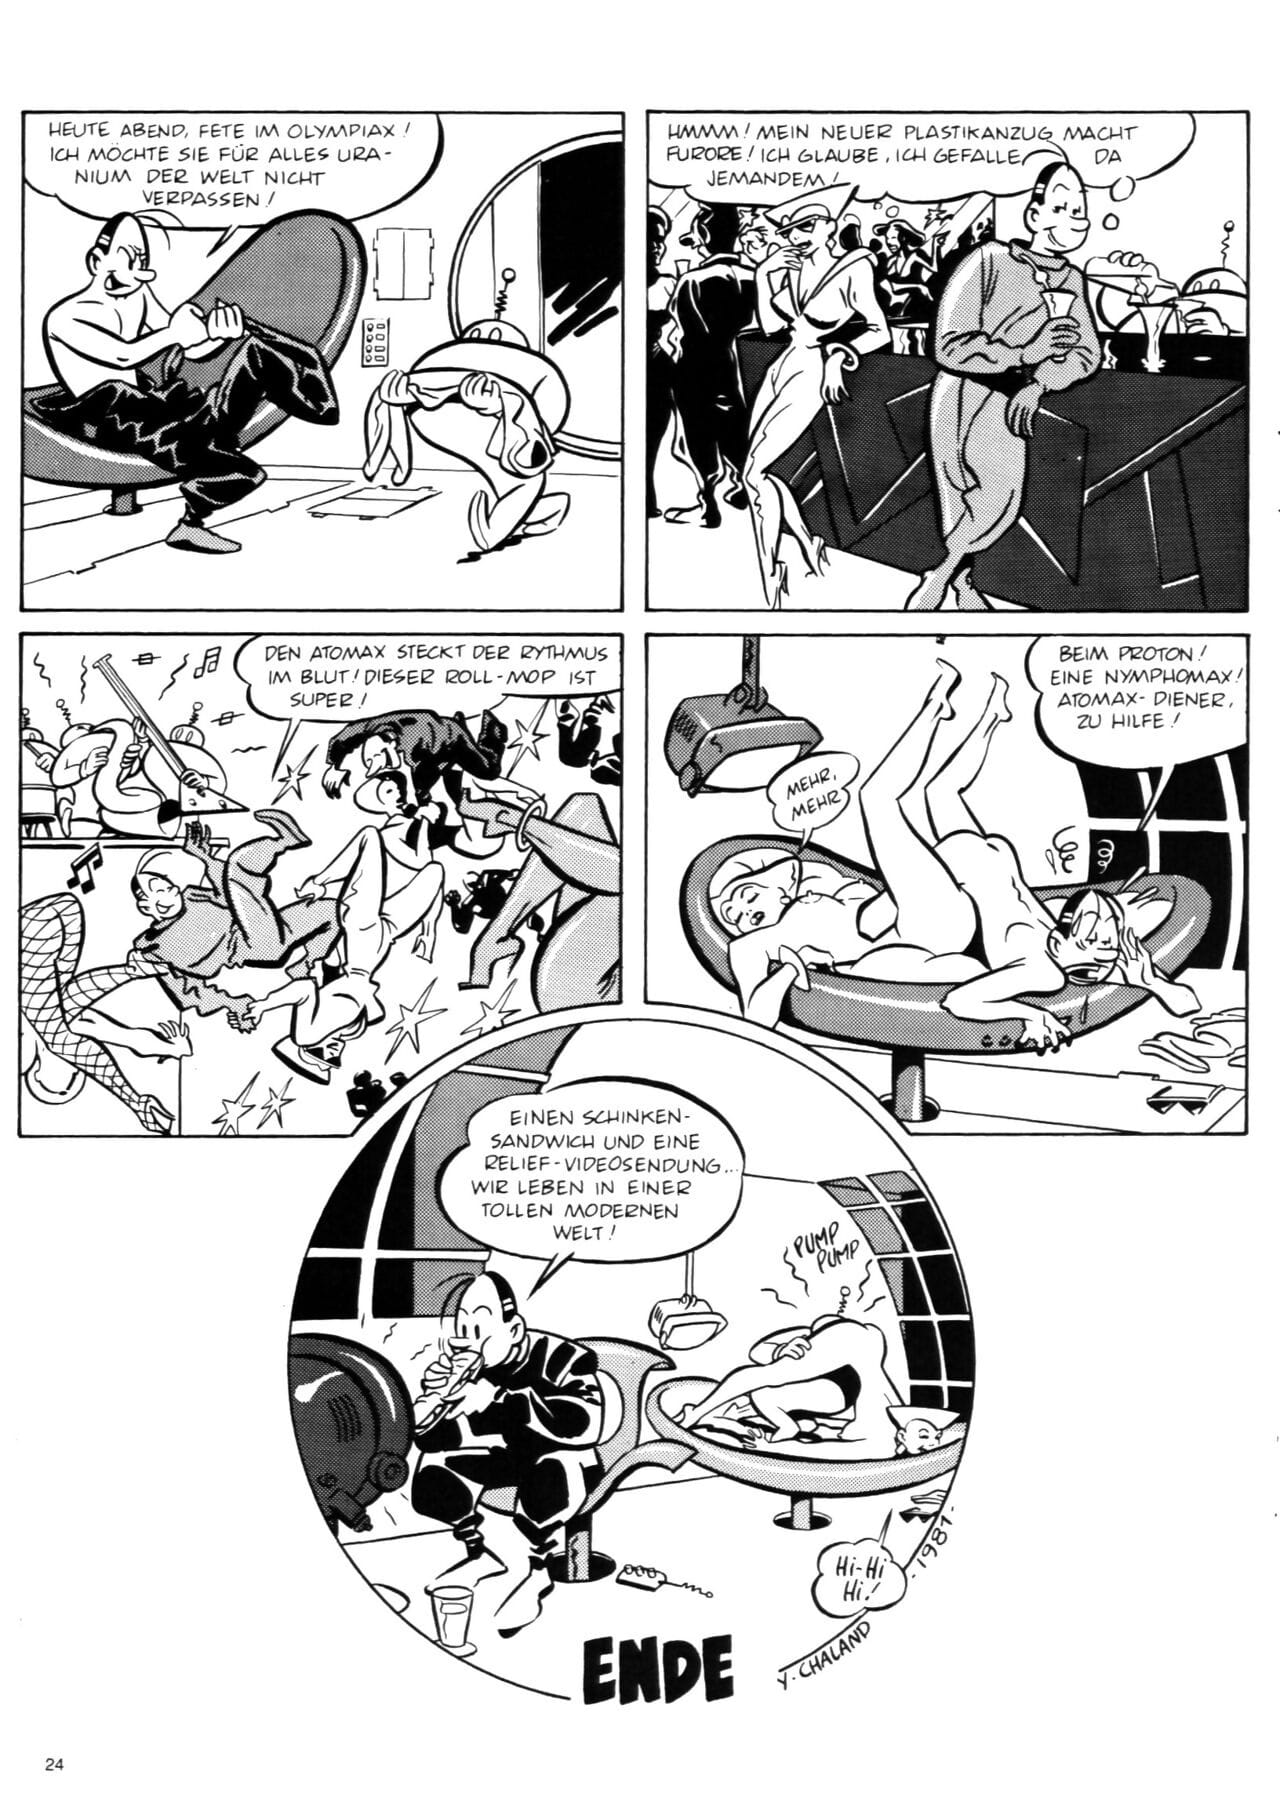 Schwermetall #056 page 1